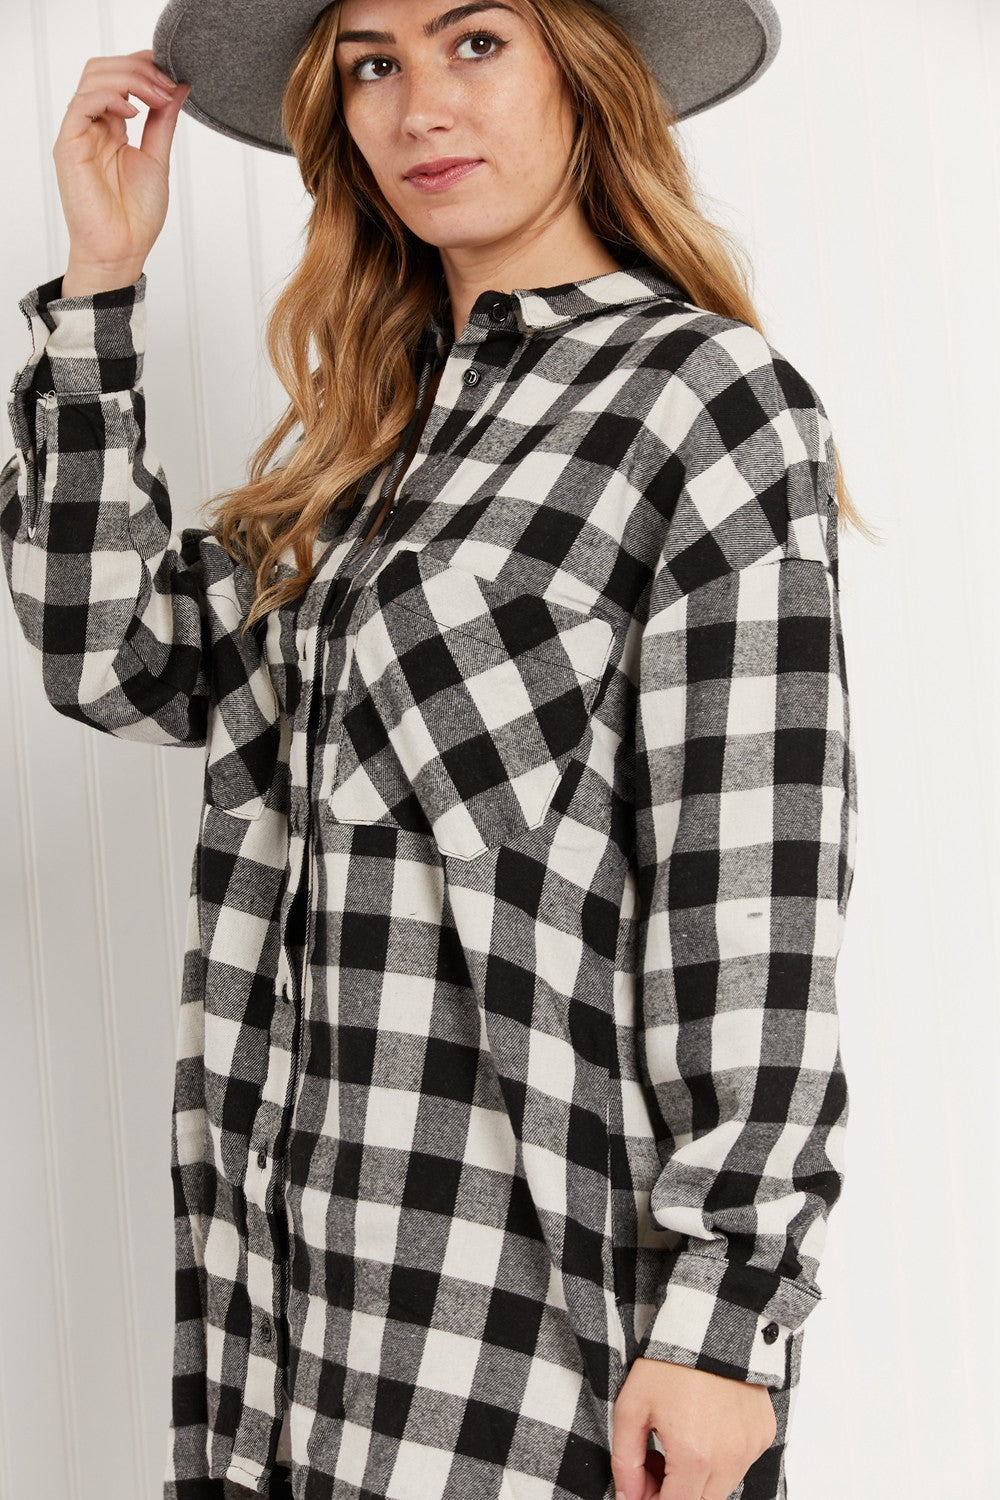 Boyfriend Material Oversized Flannel Shirt - SKYE KIYOMI BEAUTY, LLC